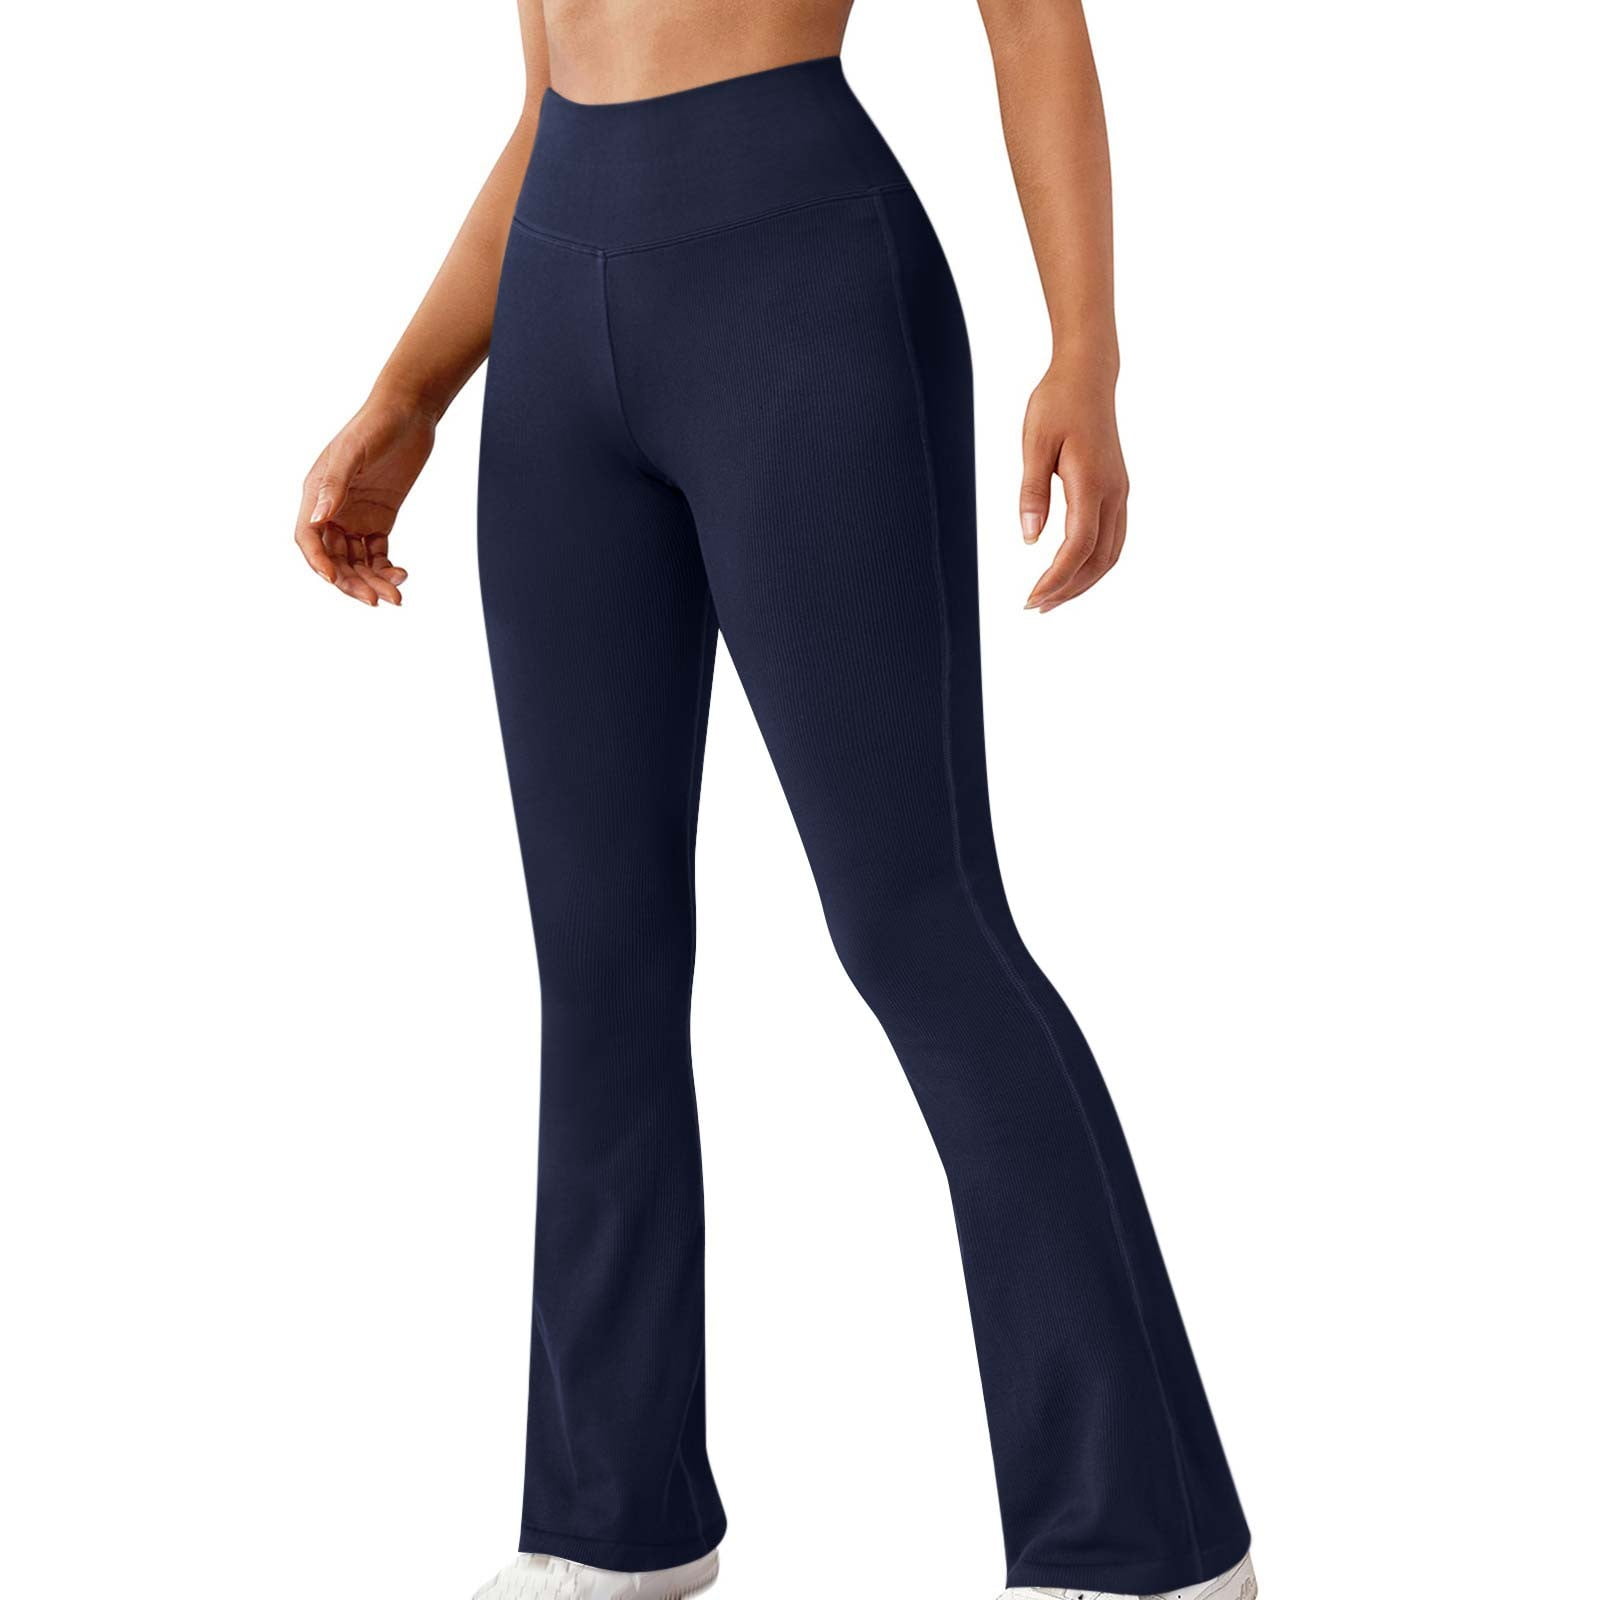 Aiithuug Yoga Pants Bell-bottom Gym Flare Leggings Bootcut Yoga